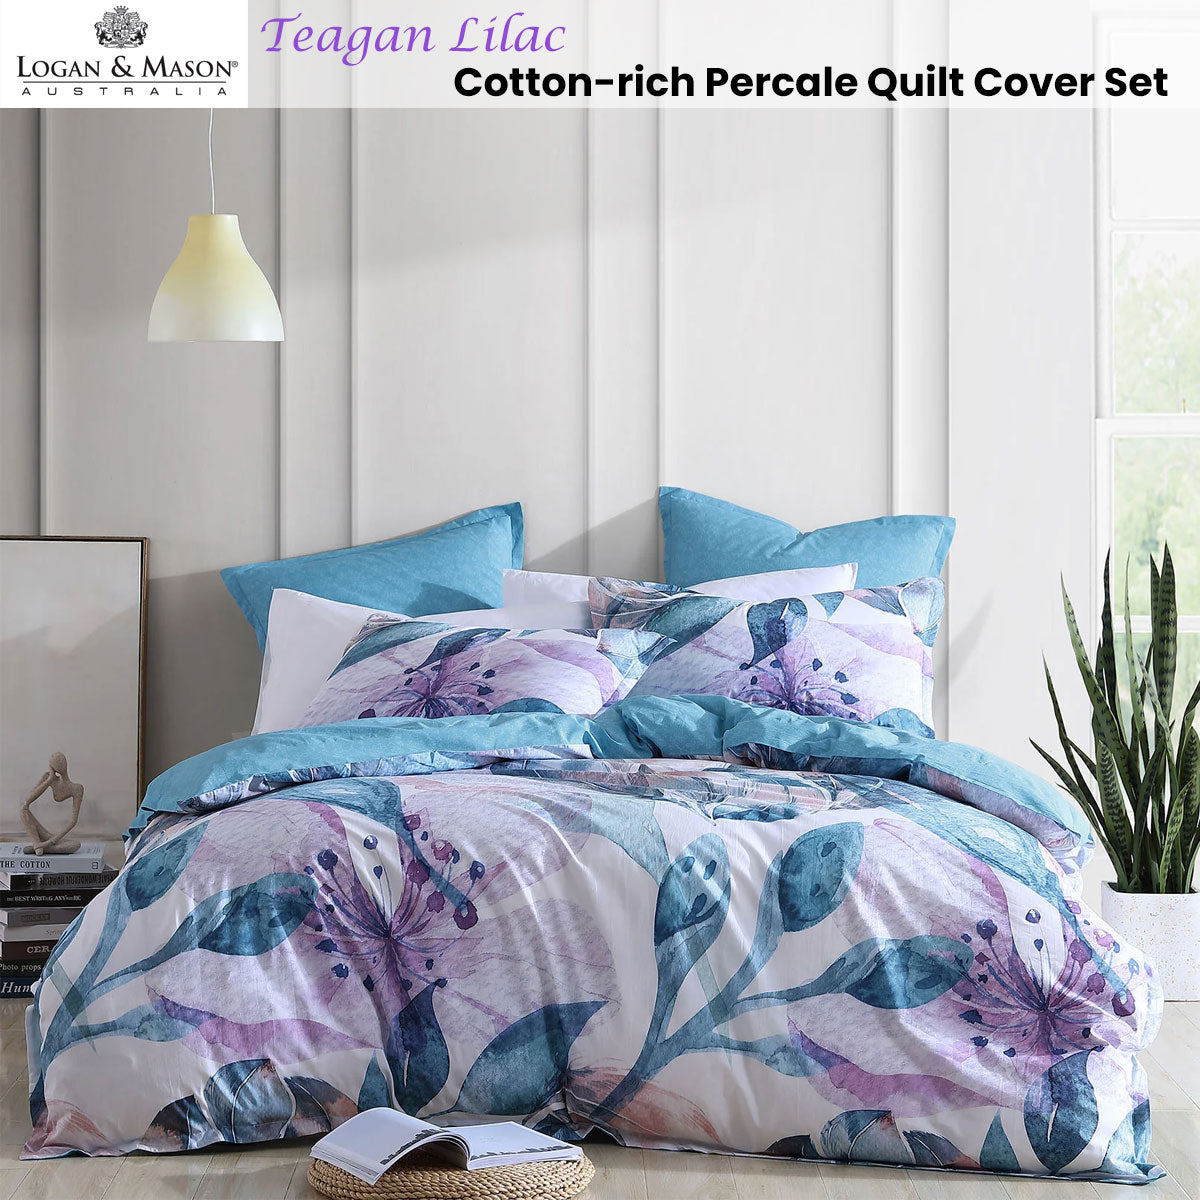 Logan and Mason Teagan Lilac Cotton-rich Percale Print King Quilt Cover Set